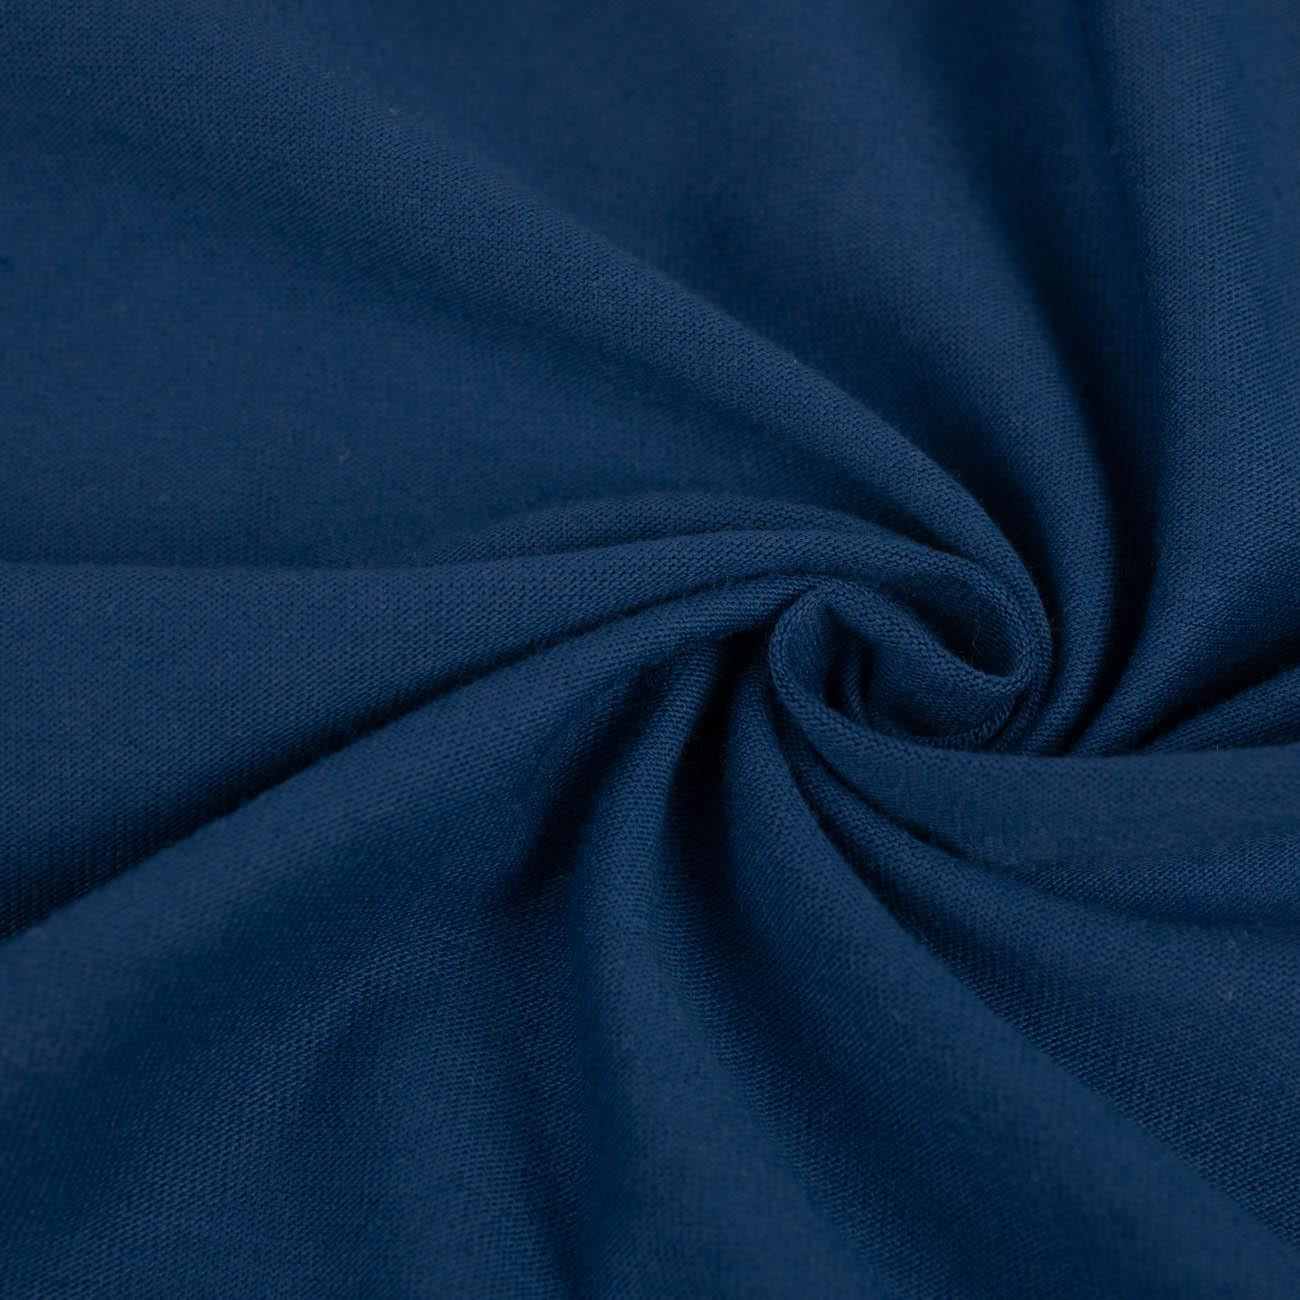 D-94 DARK BLUE - T-shirt knit fabric 100% cotton T140